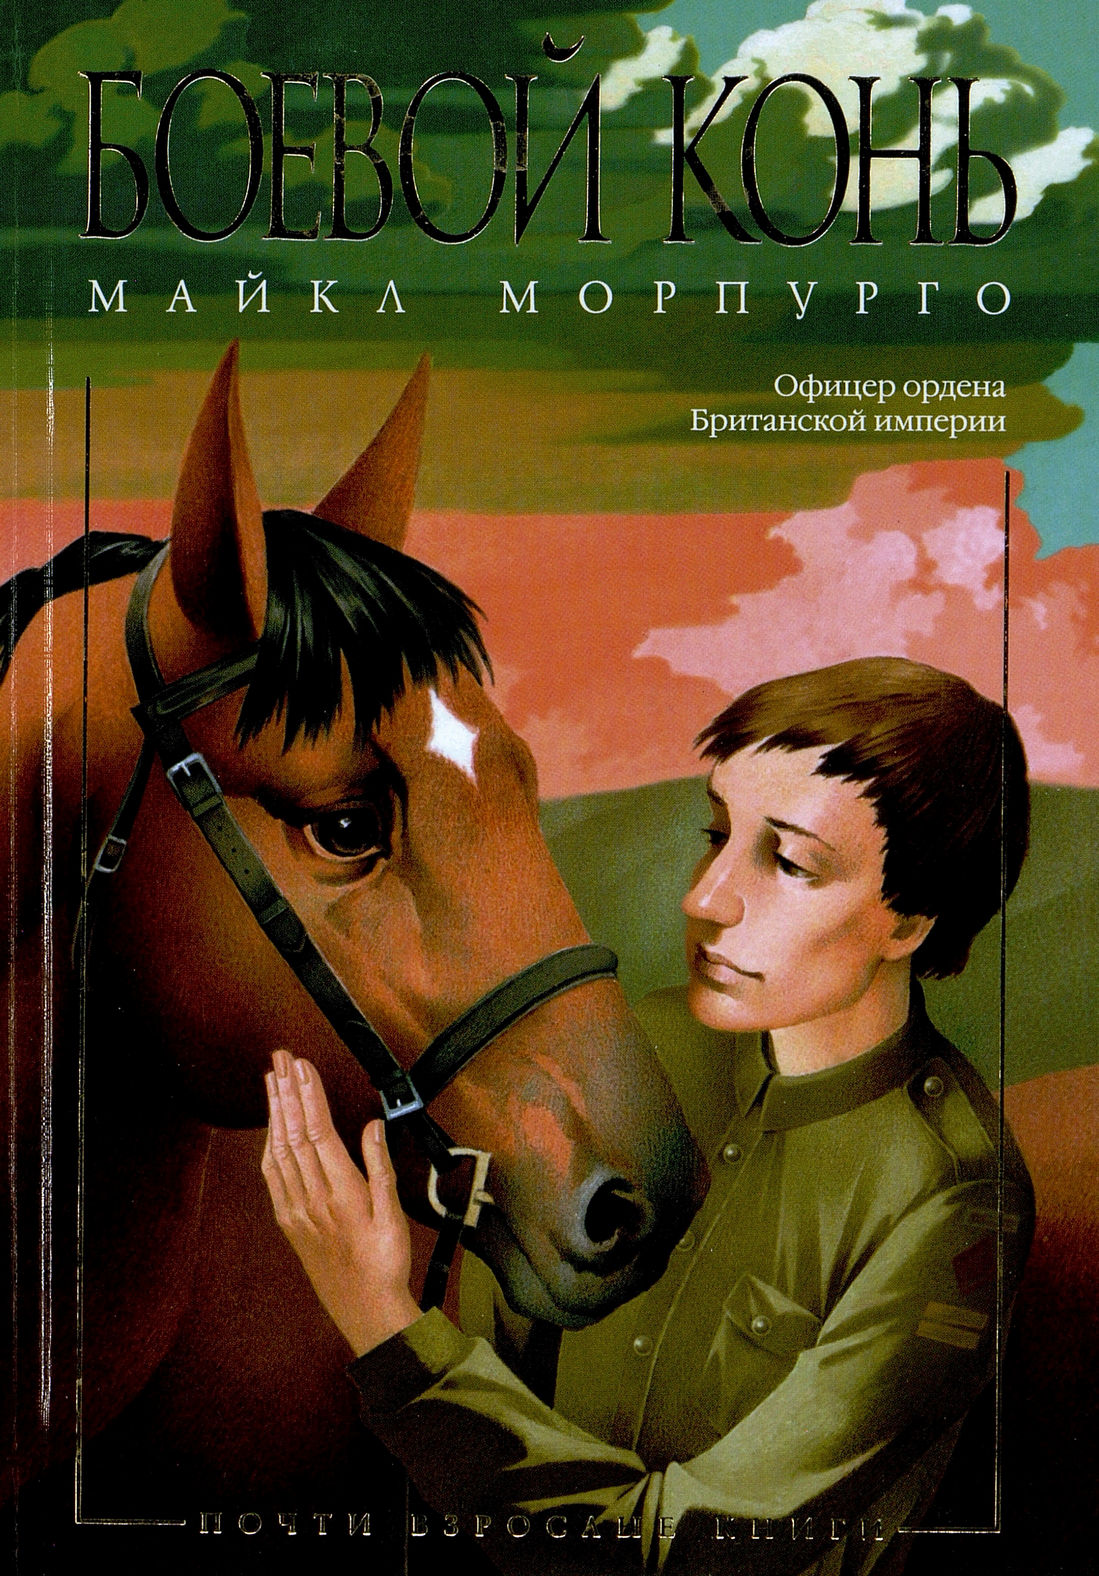 Книги про конни. Книги о лошадях для детей.